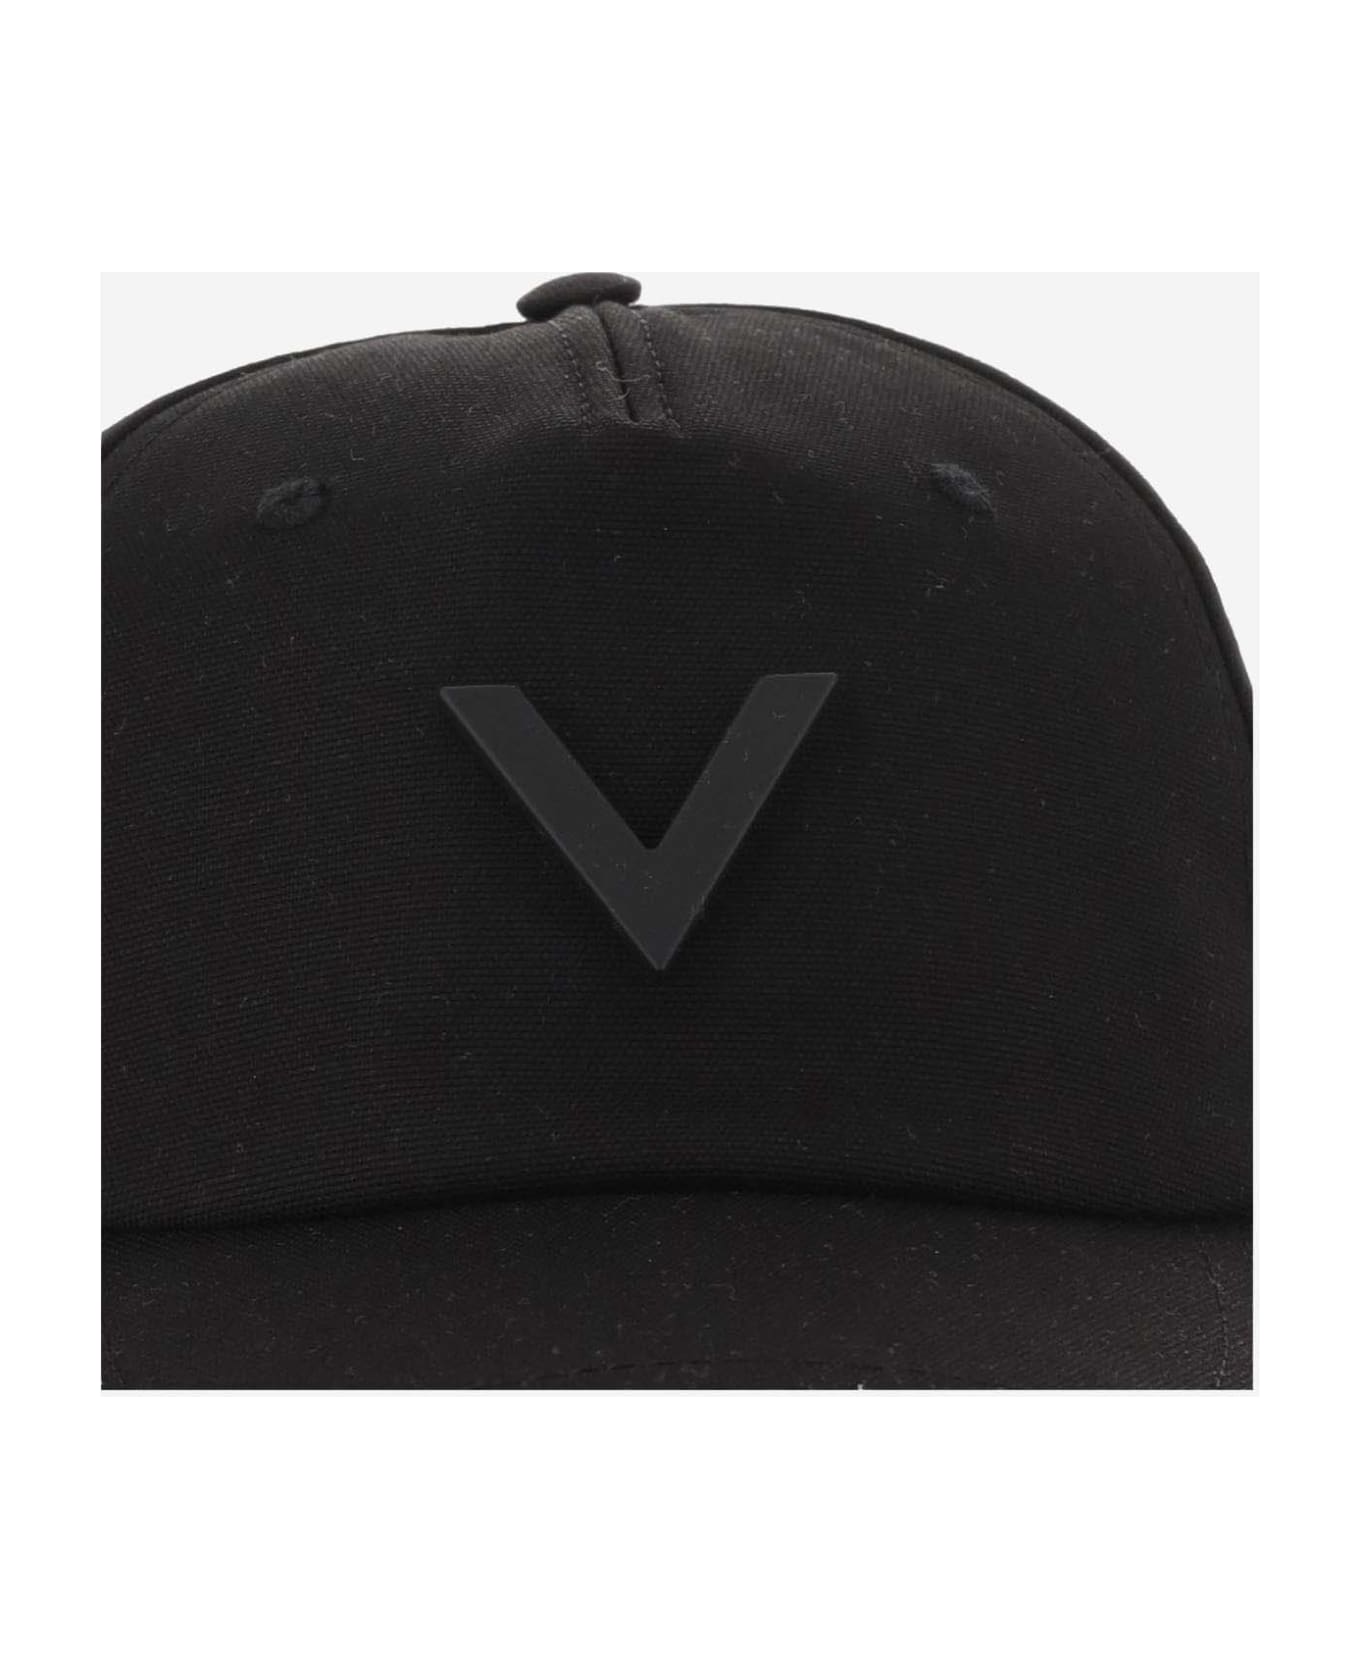 Valentino Garavani Canvas Hat With Vlogo - Black